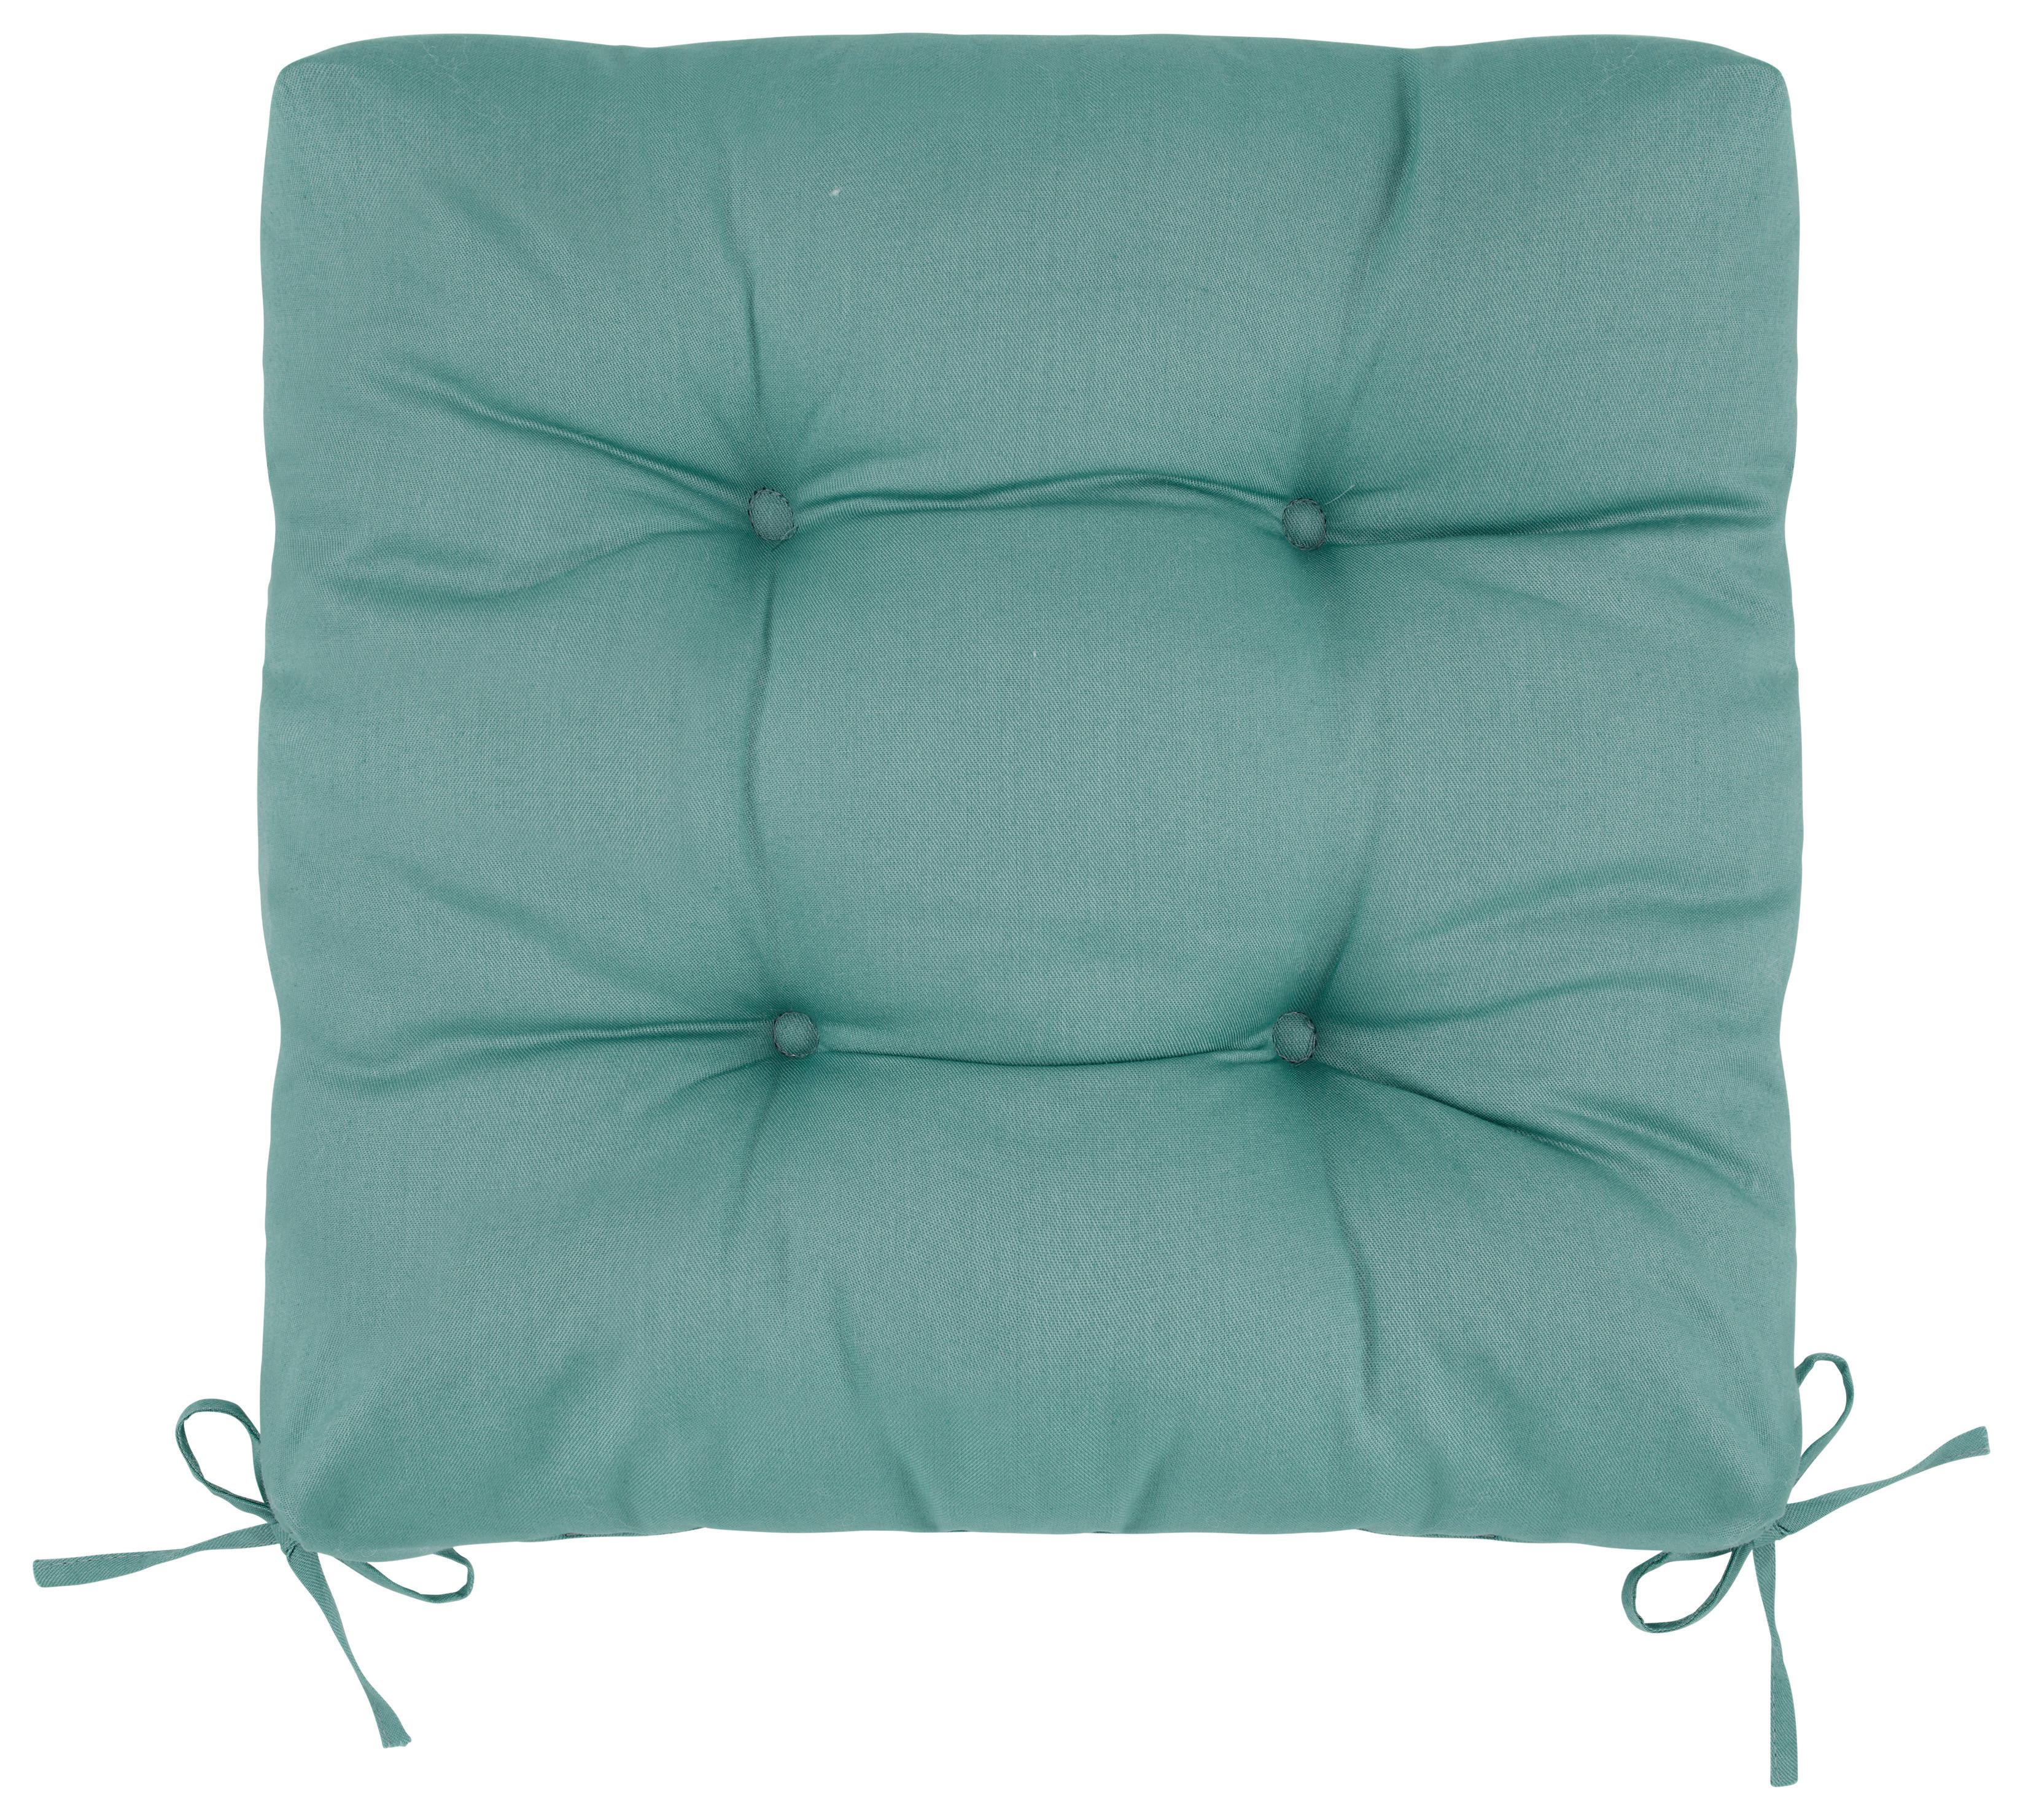 Sedežna Blazina Elli - modra, Konvencionalno, tekstil (40/40/7cm) - Modern Living